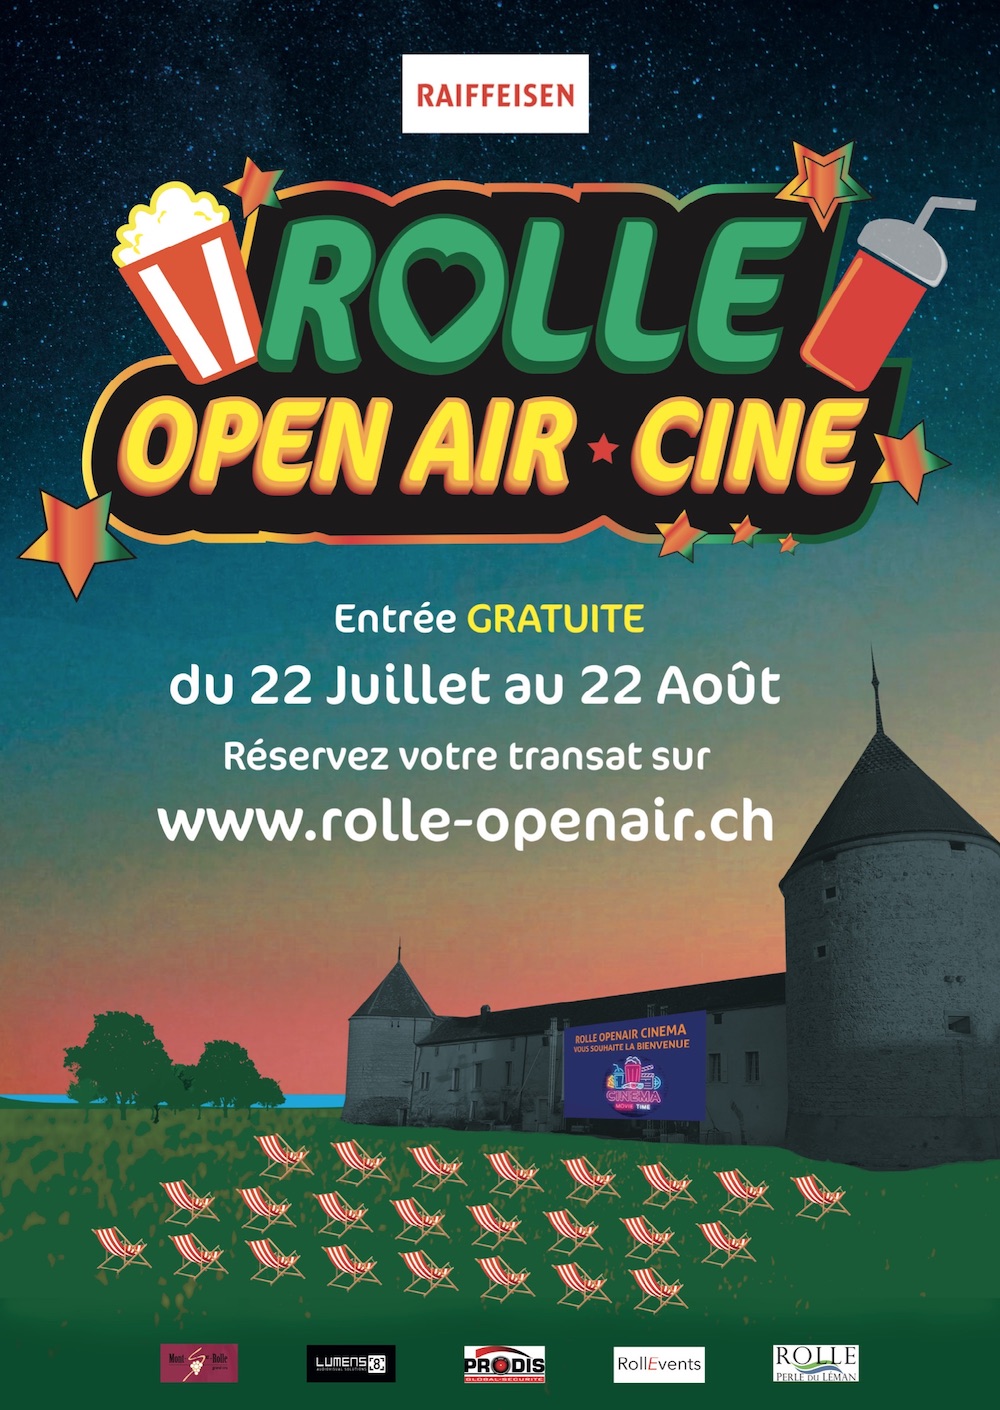 Rolle Openair Cinema 2020